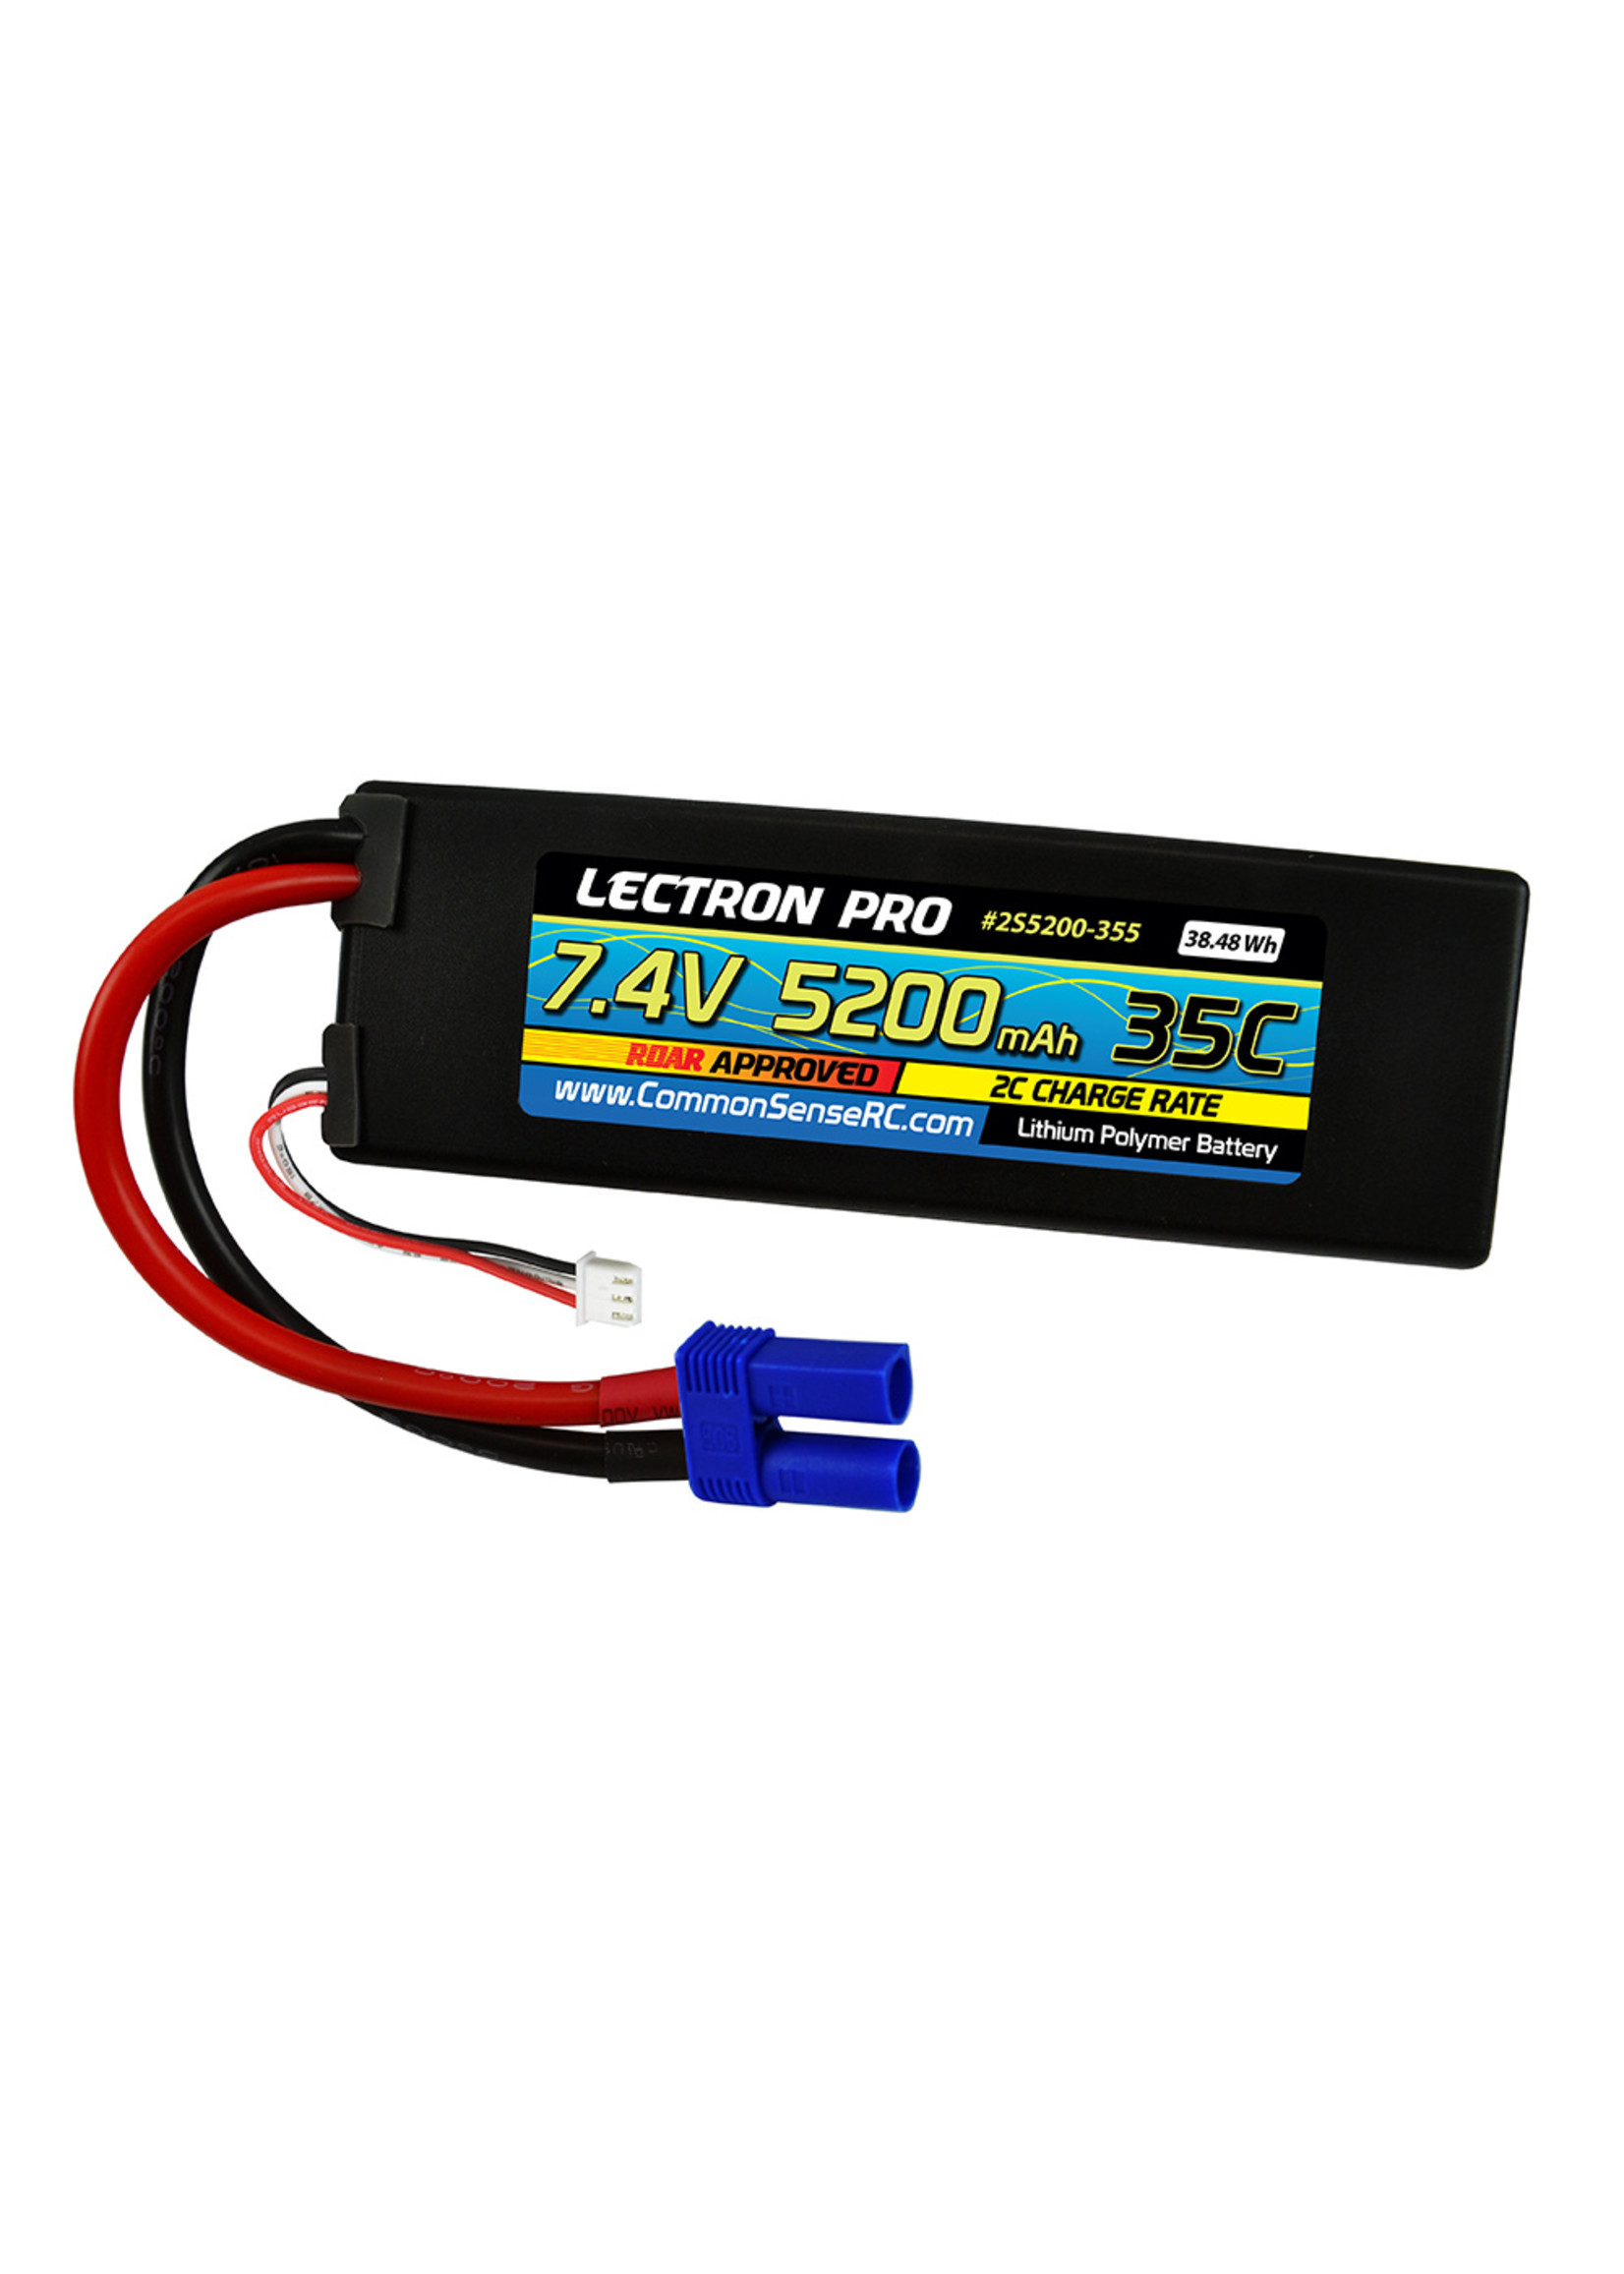 Common Sense RC 2S5200-355 - 7.4V 5200mAh 35C Lipo Battery with EC5 Connector